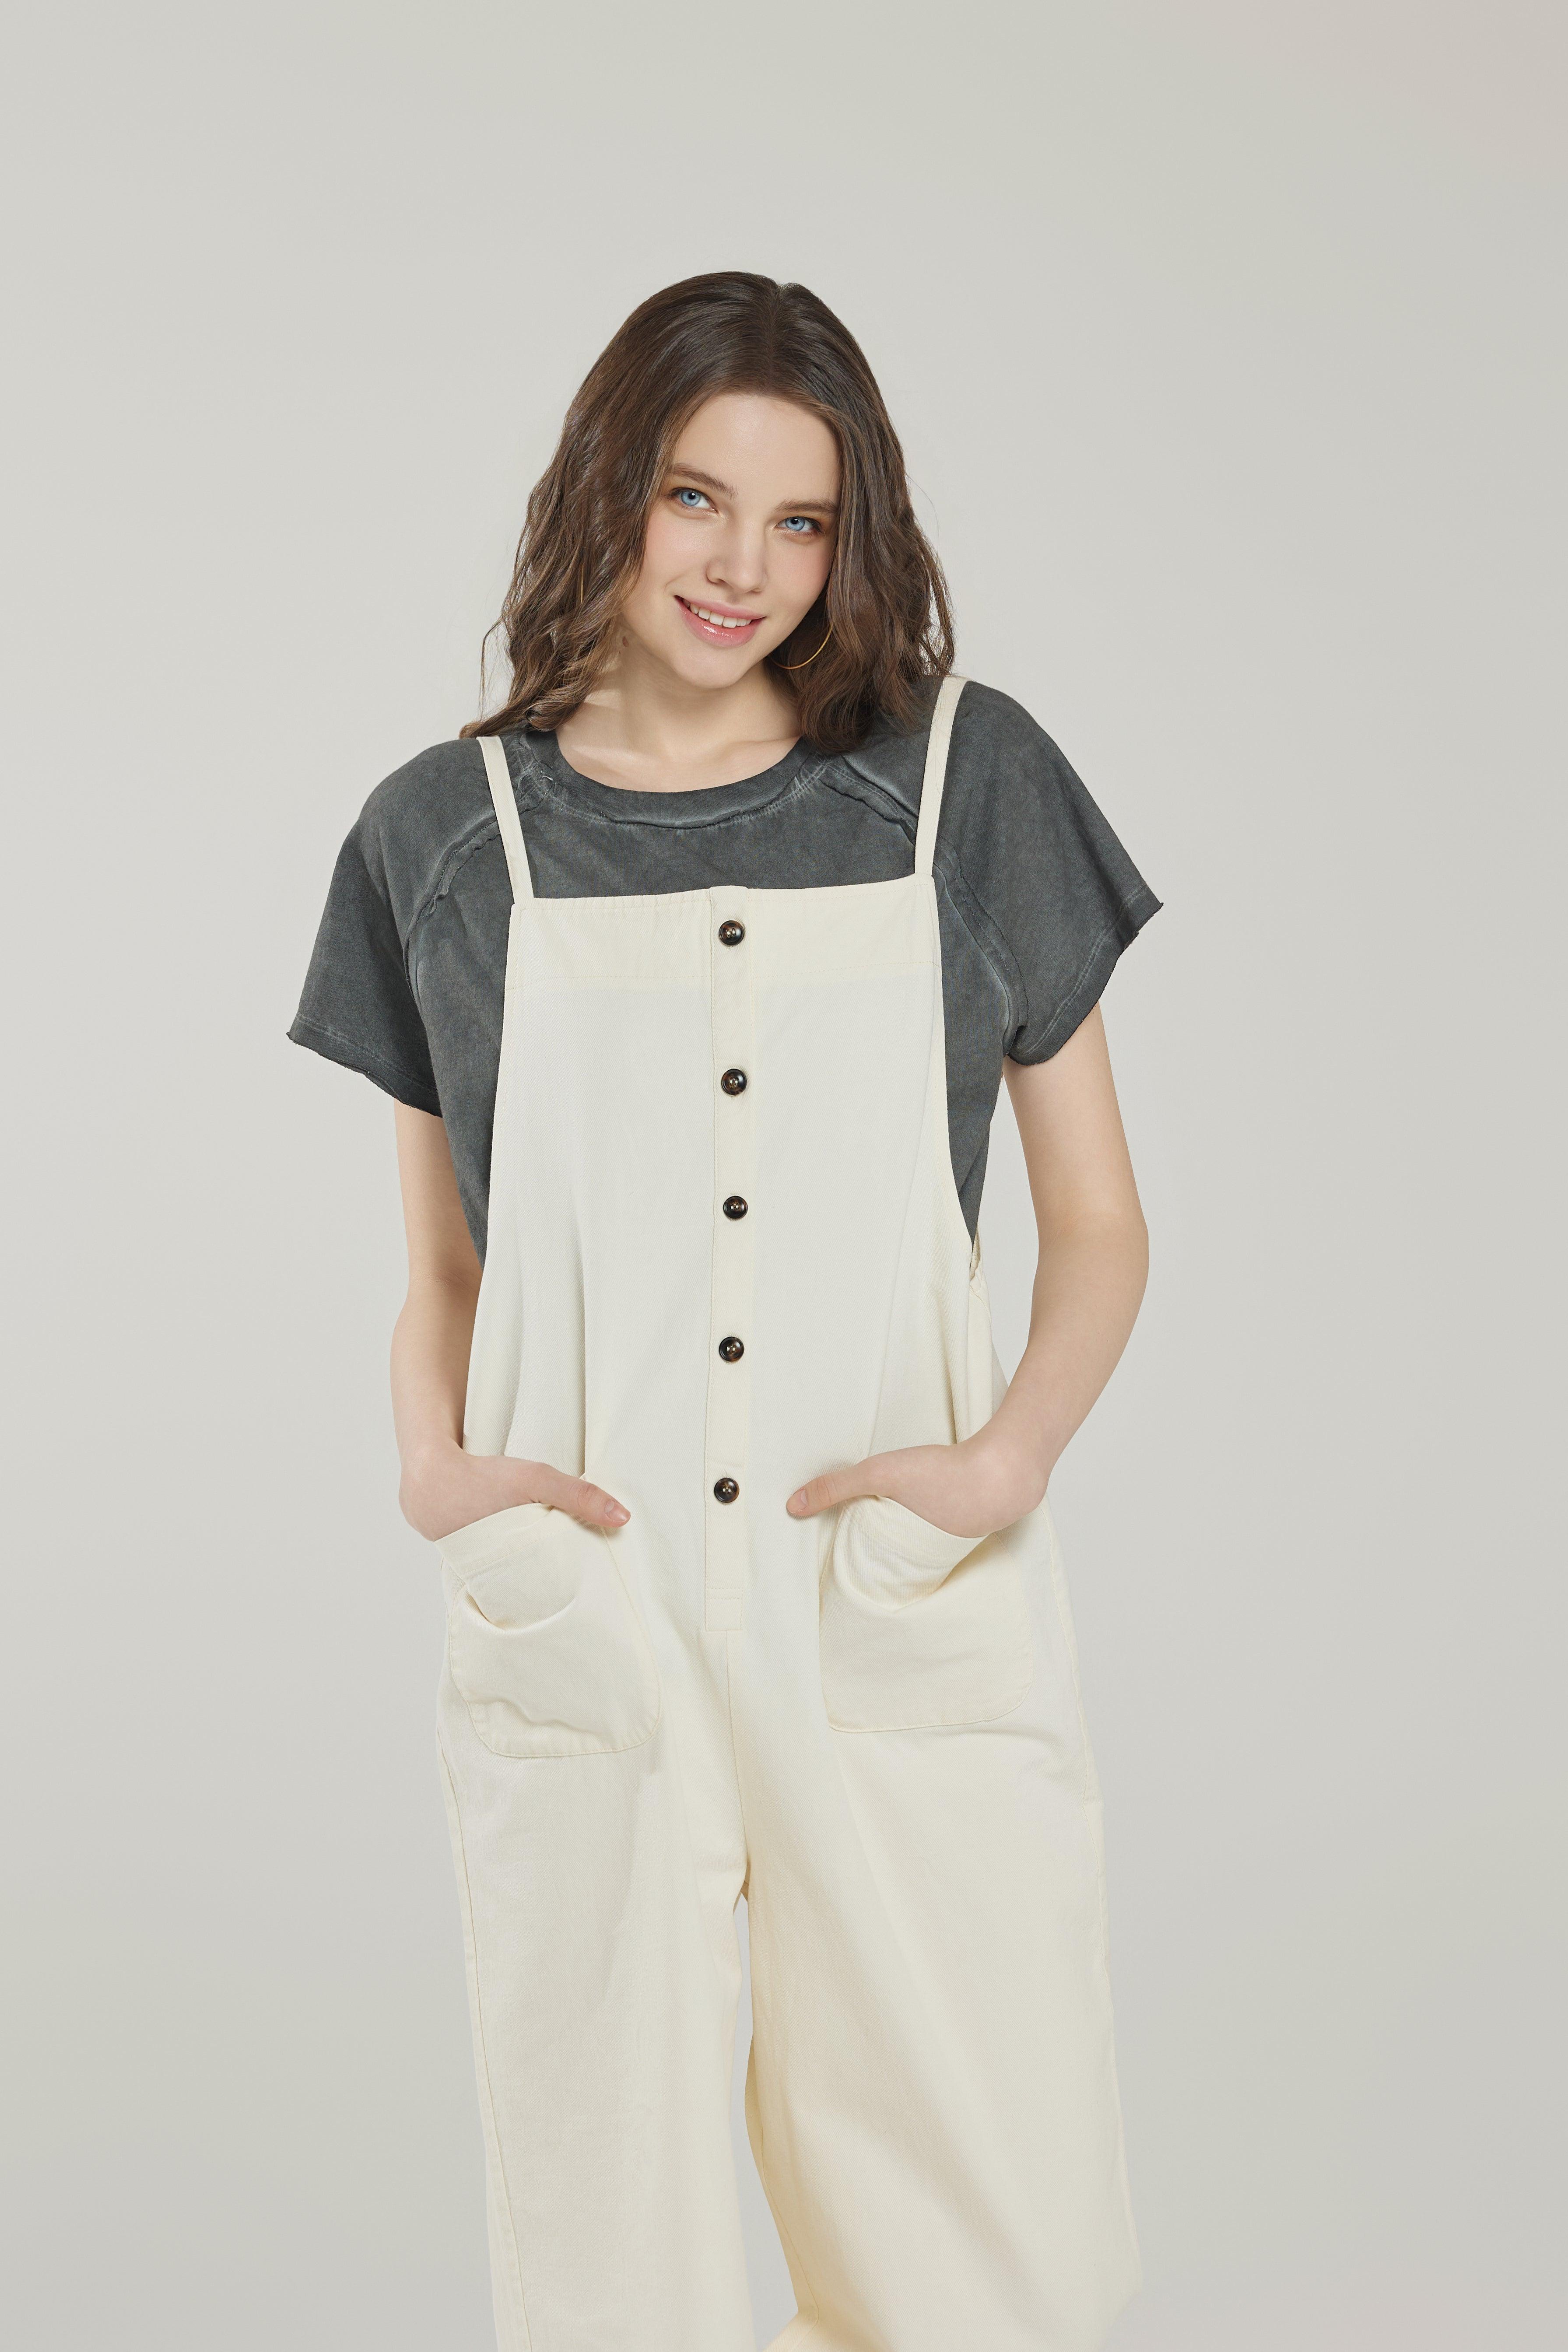 100% cotton Button Down Sleeveless Overalls Jumpsuit with Pockets - Cream - noflik